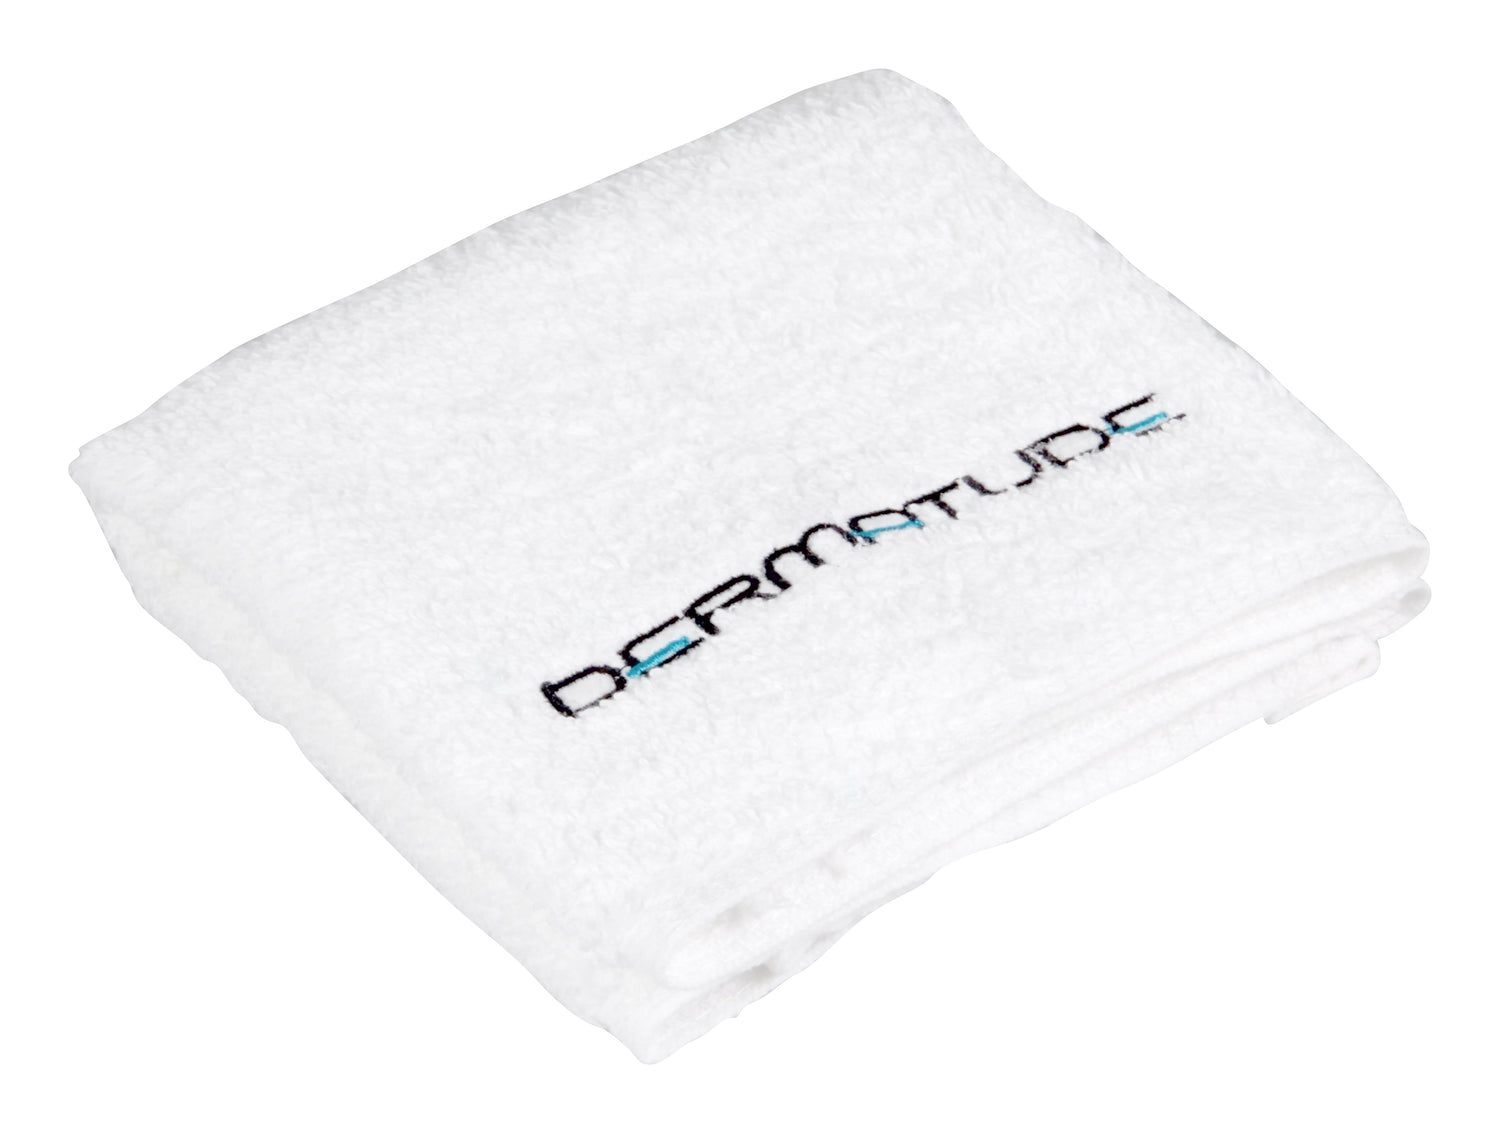 Dermatude Compress towel white with logo - 30x45 cm